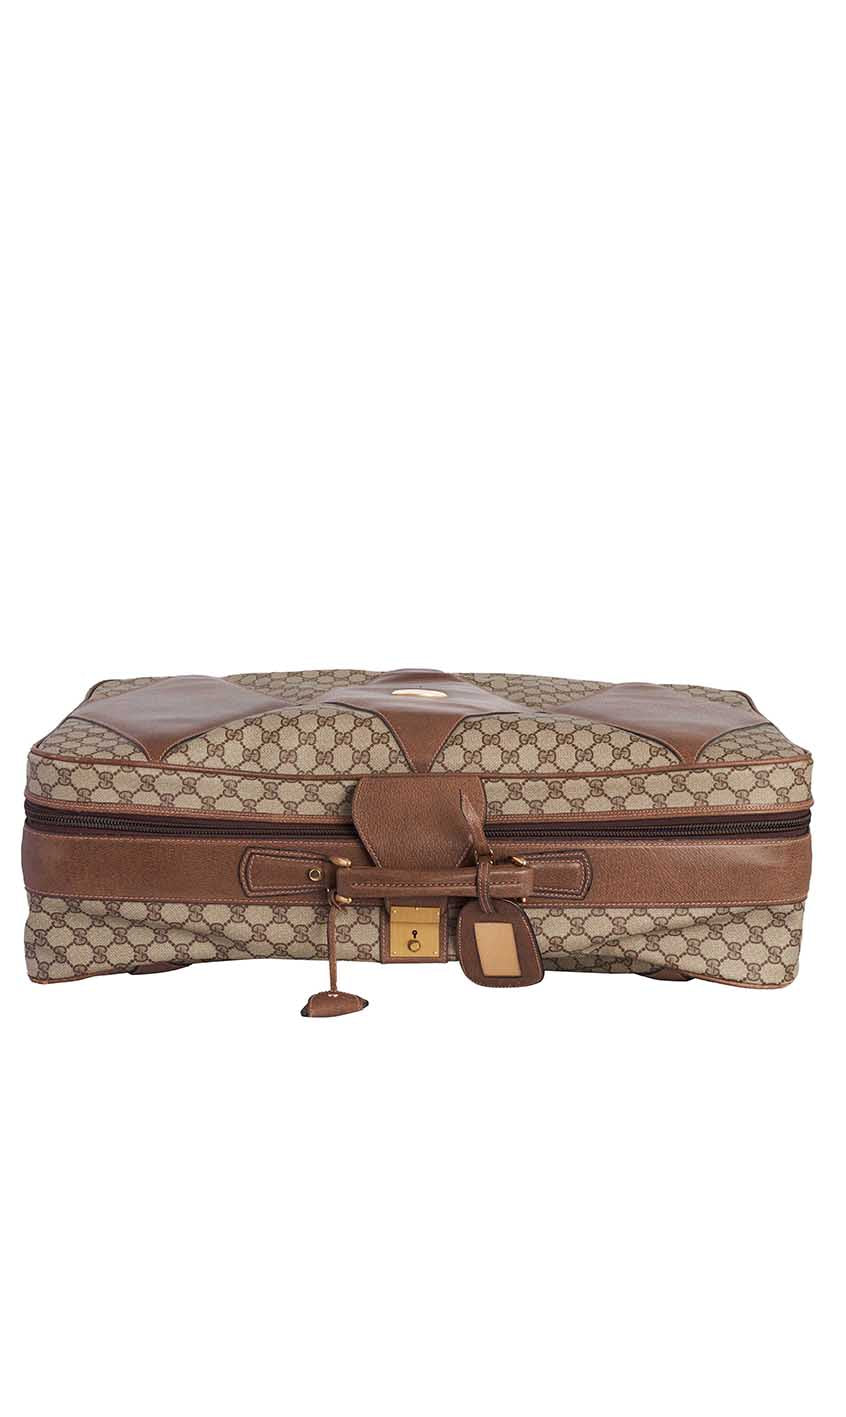 Gucci Vintage 1970's Harlequin Suitcase